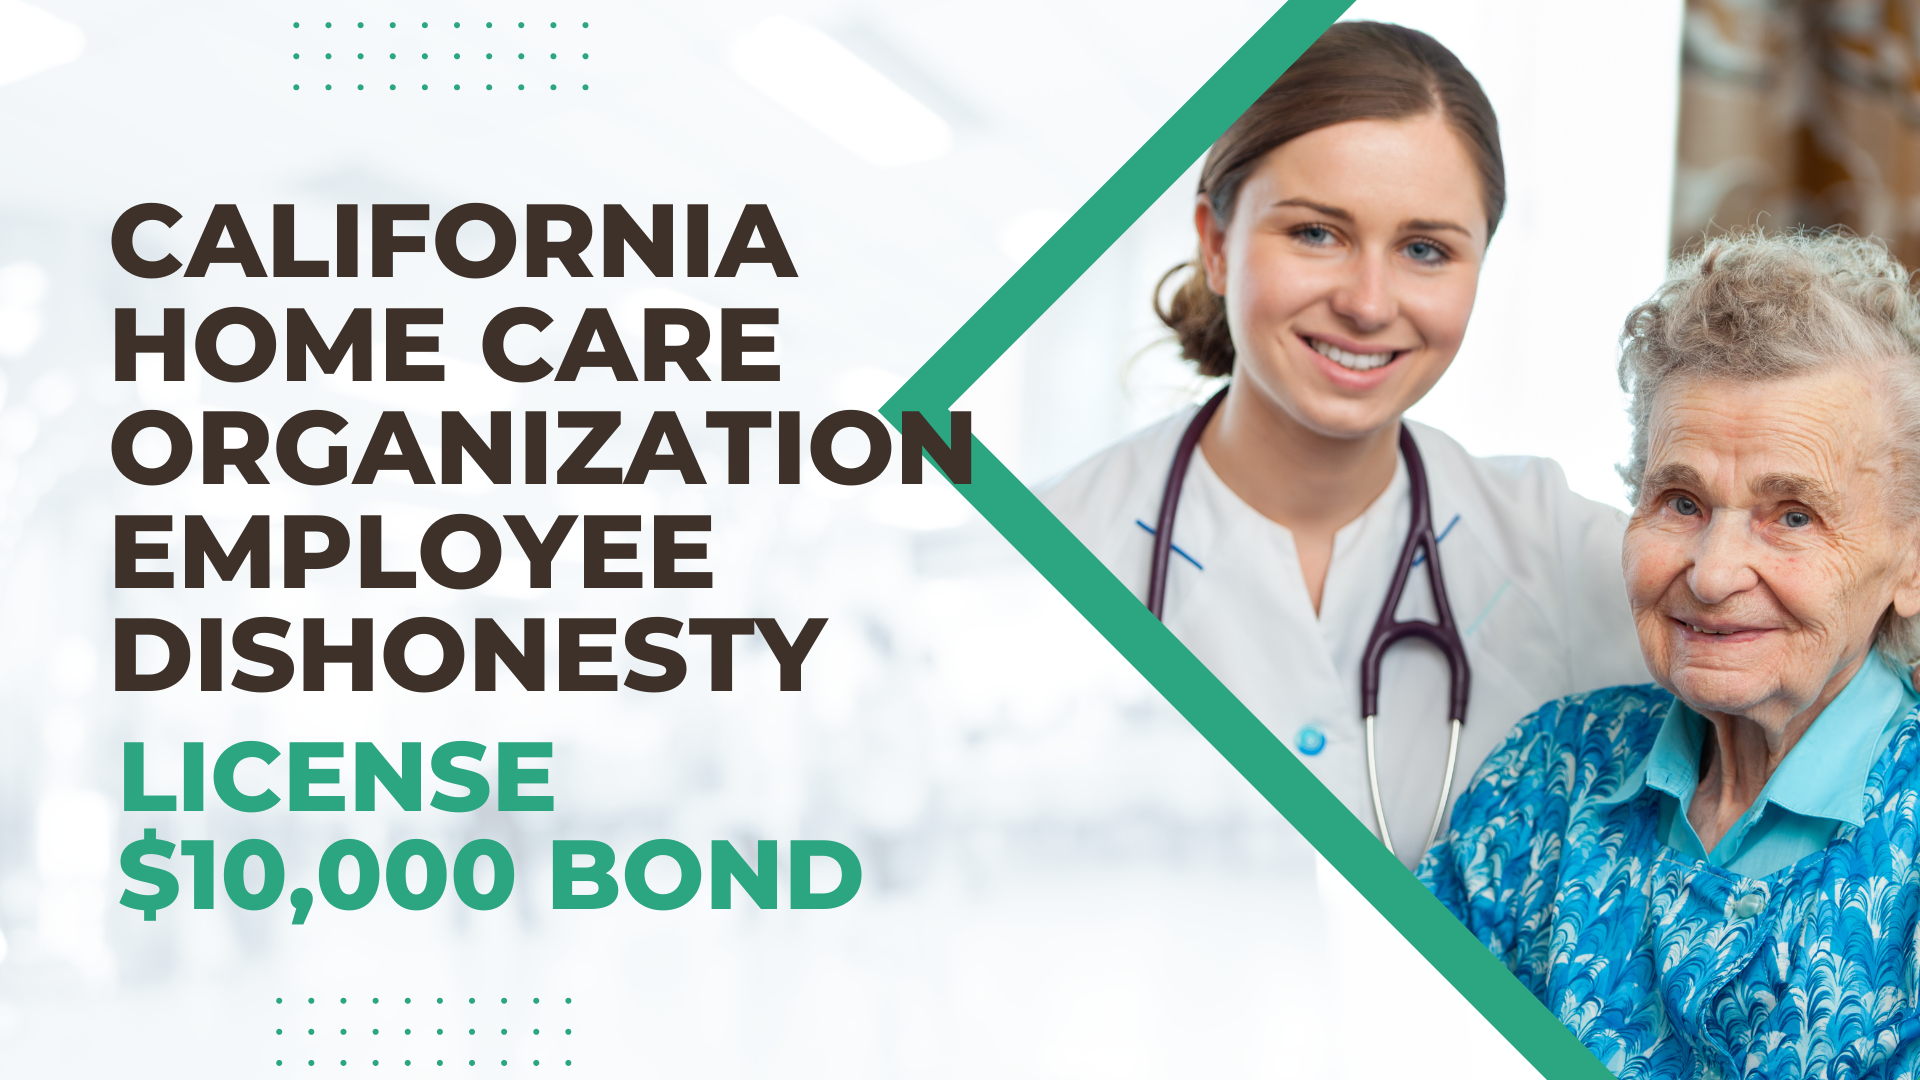 Surety Bond-California Home Care Organization Employee Dishonesty License $10,000 Bond